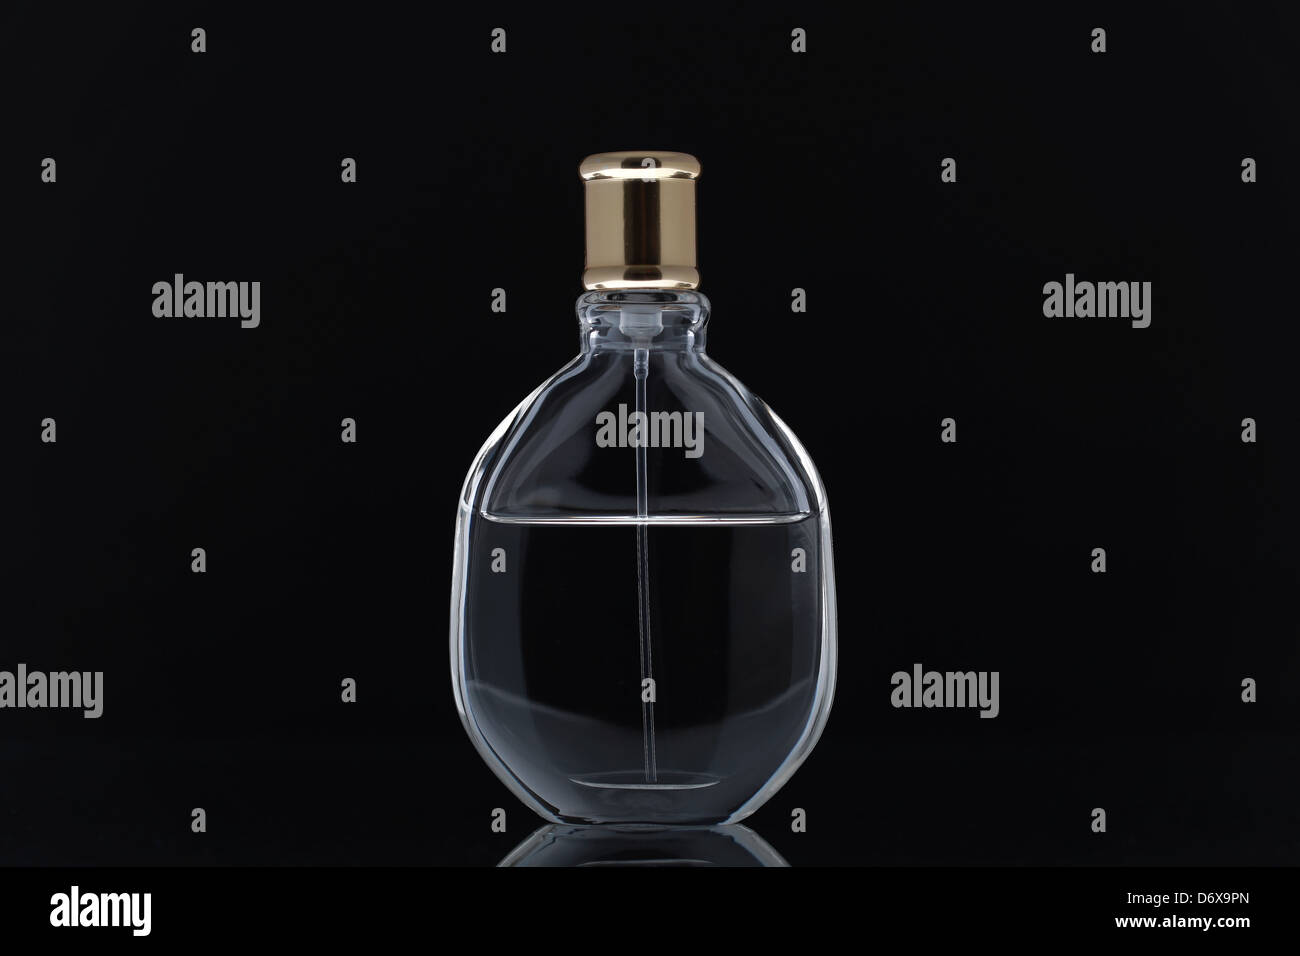 Perfume bottle on black mirror background Stock Photo